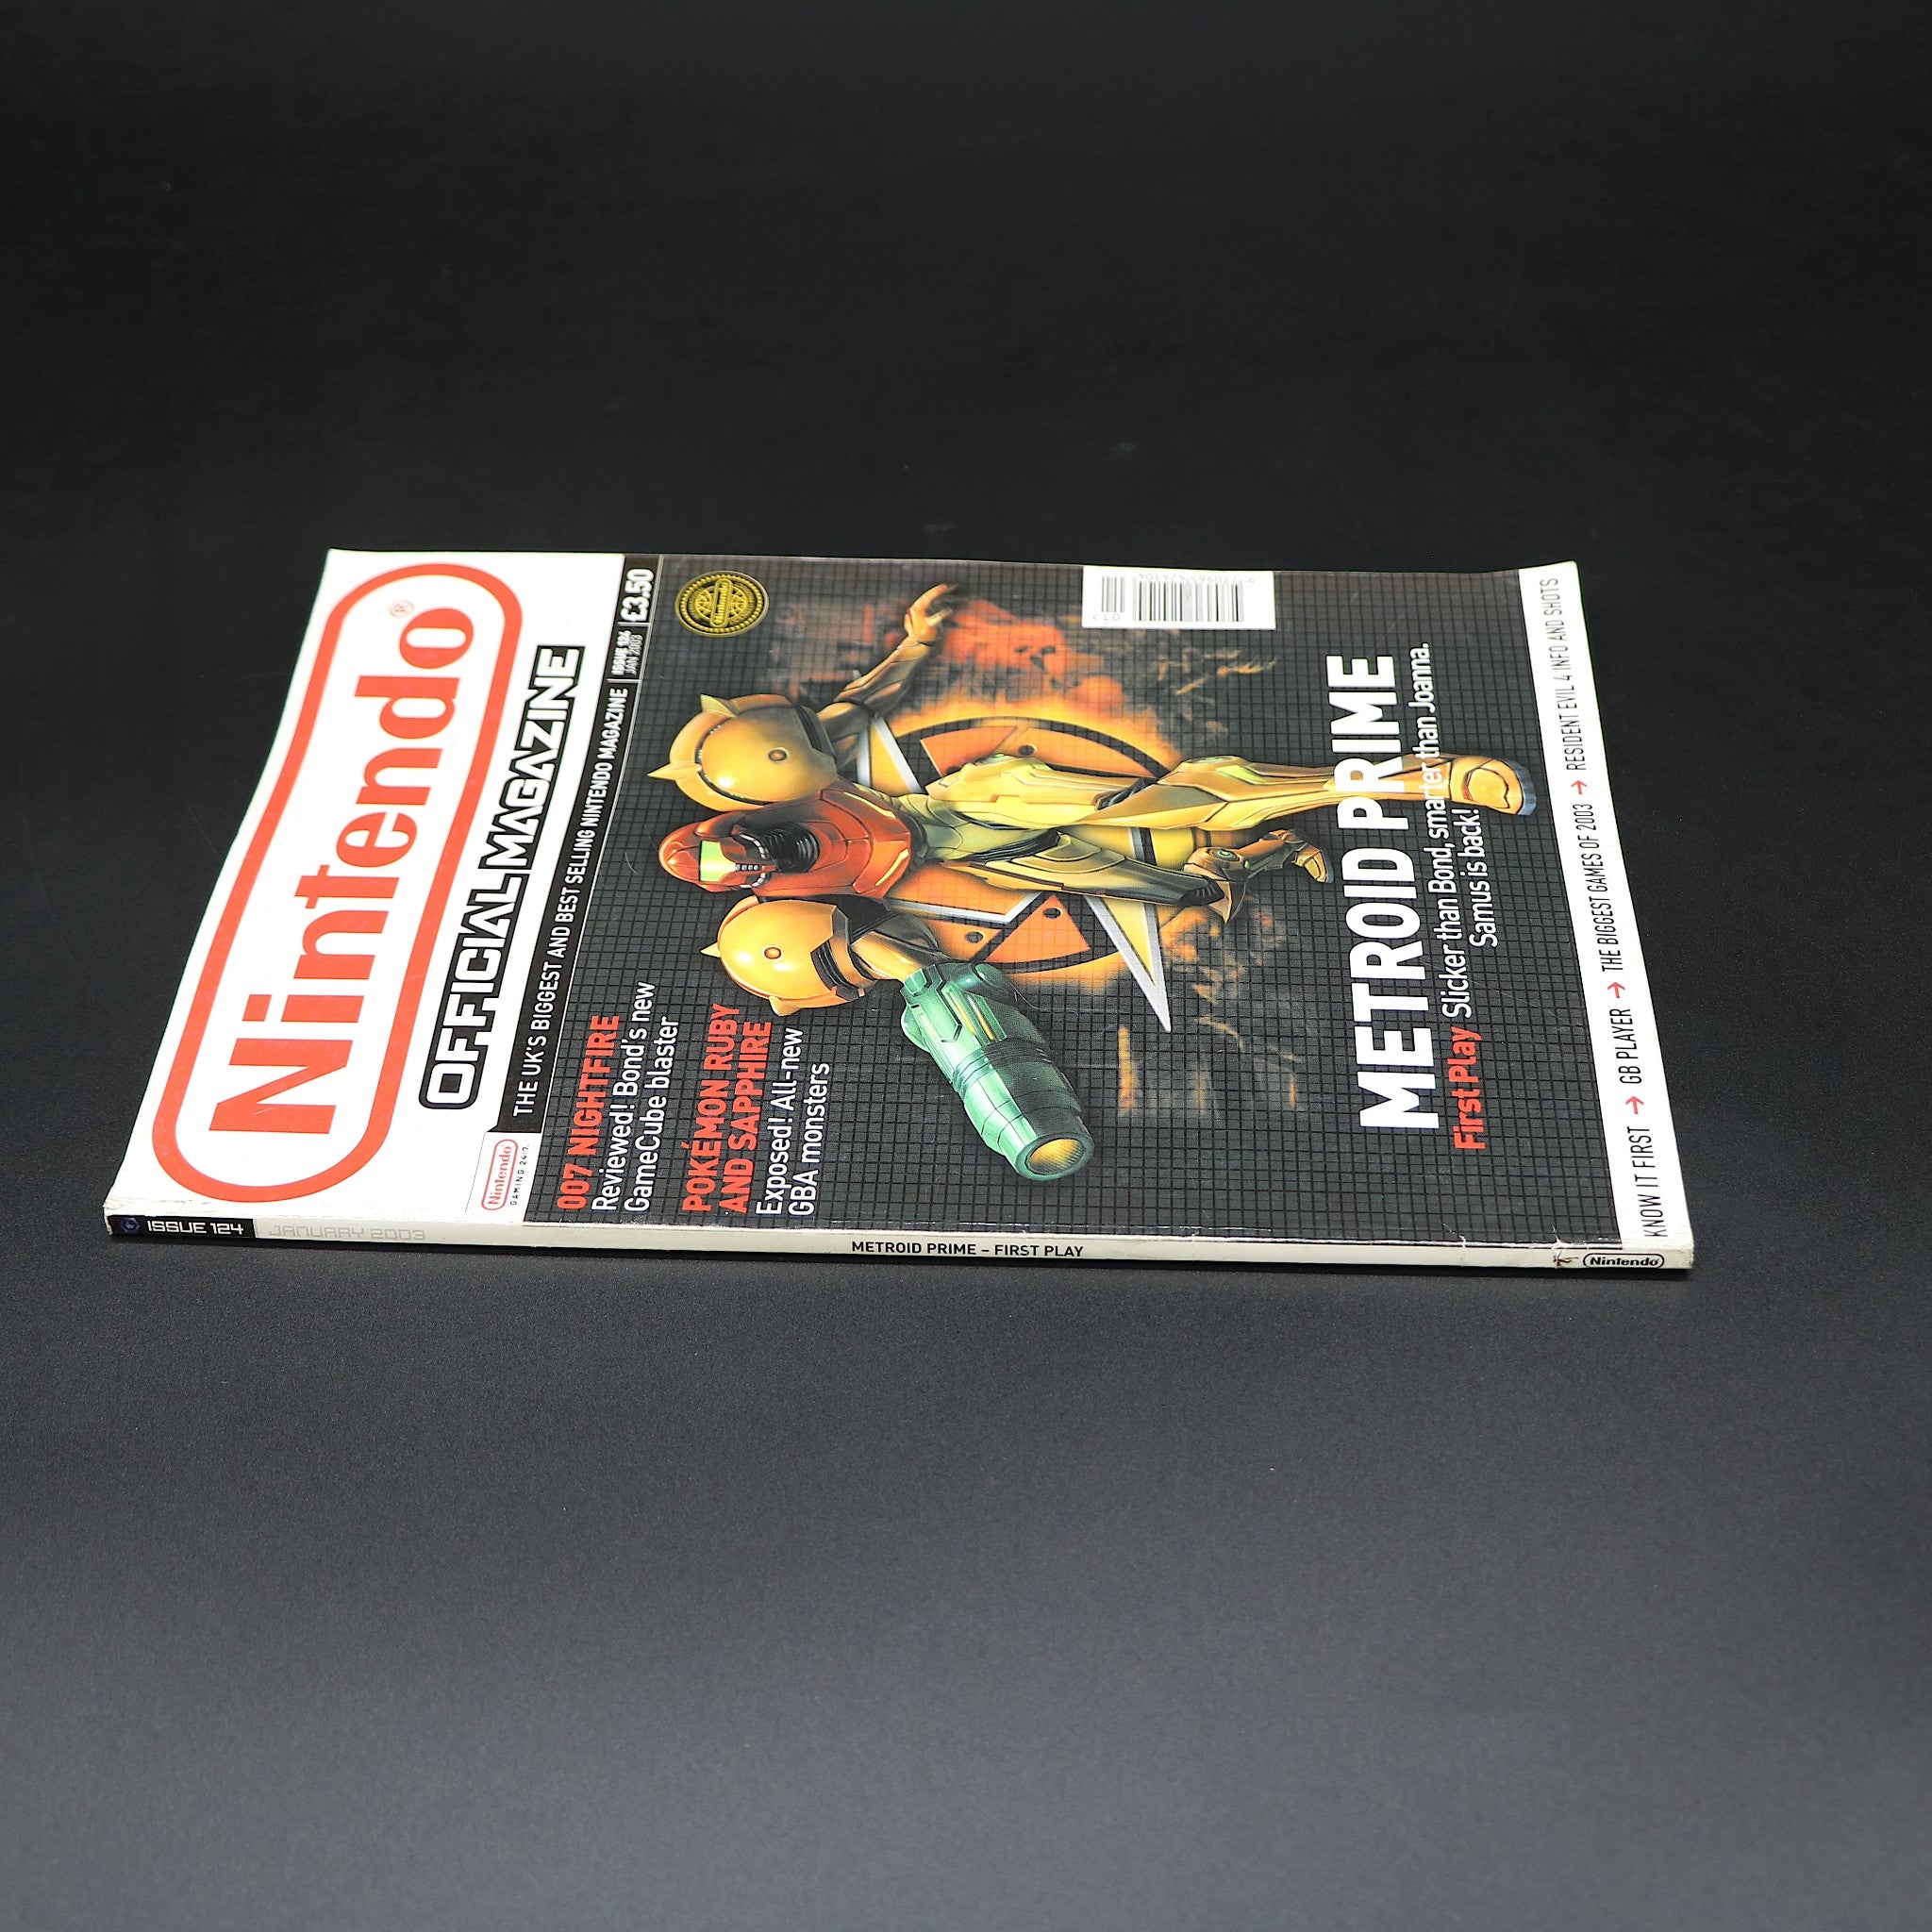 Official Nintendo Magazine NOM UK | Issue 124 Jan 2003 | Metroid Prime